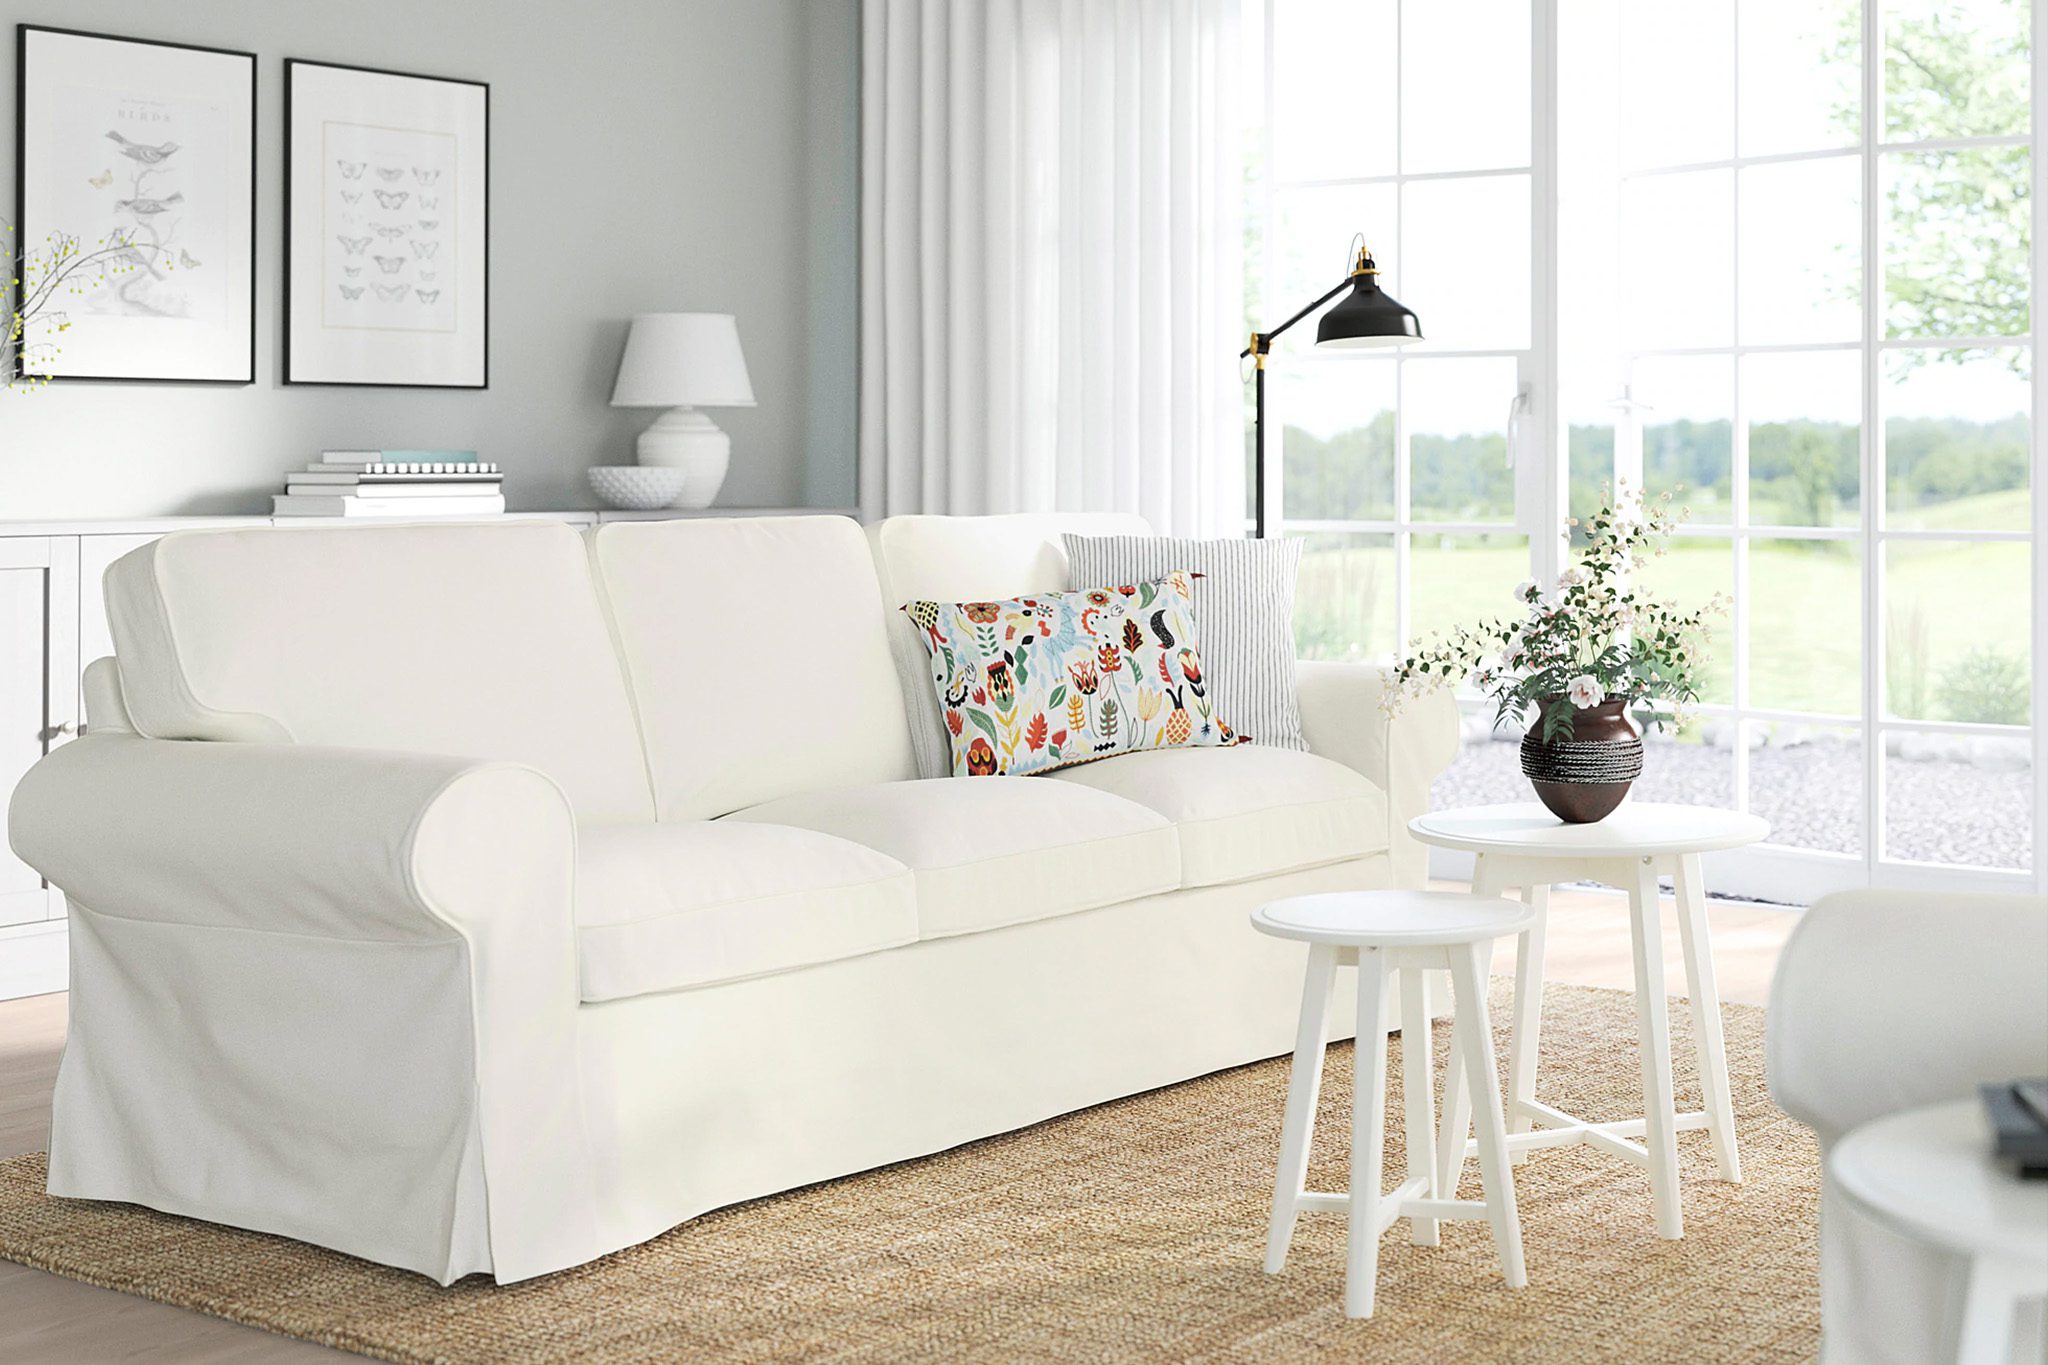 custom-white-uppland-sofa-covers